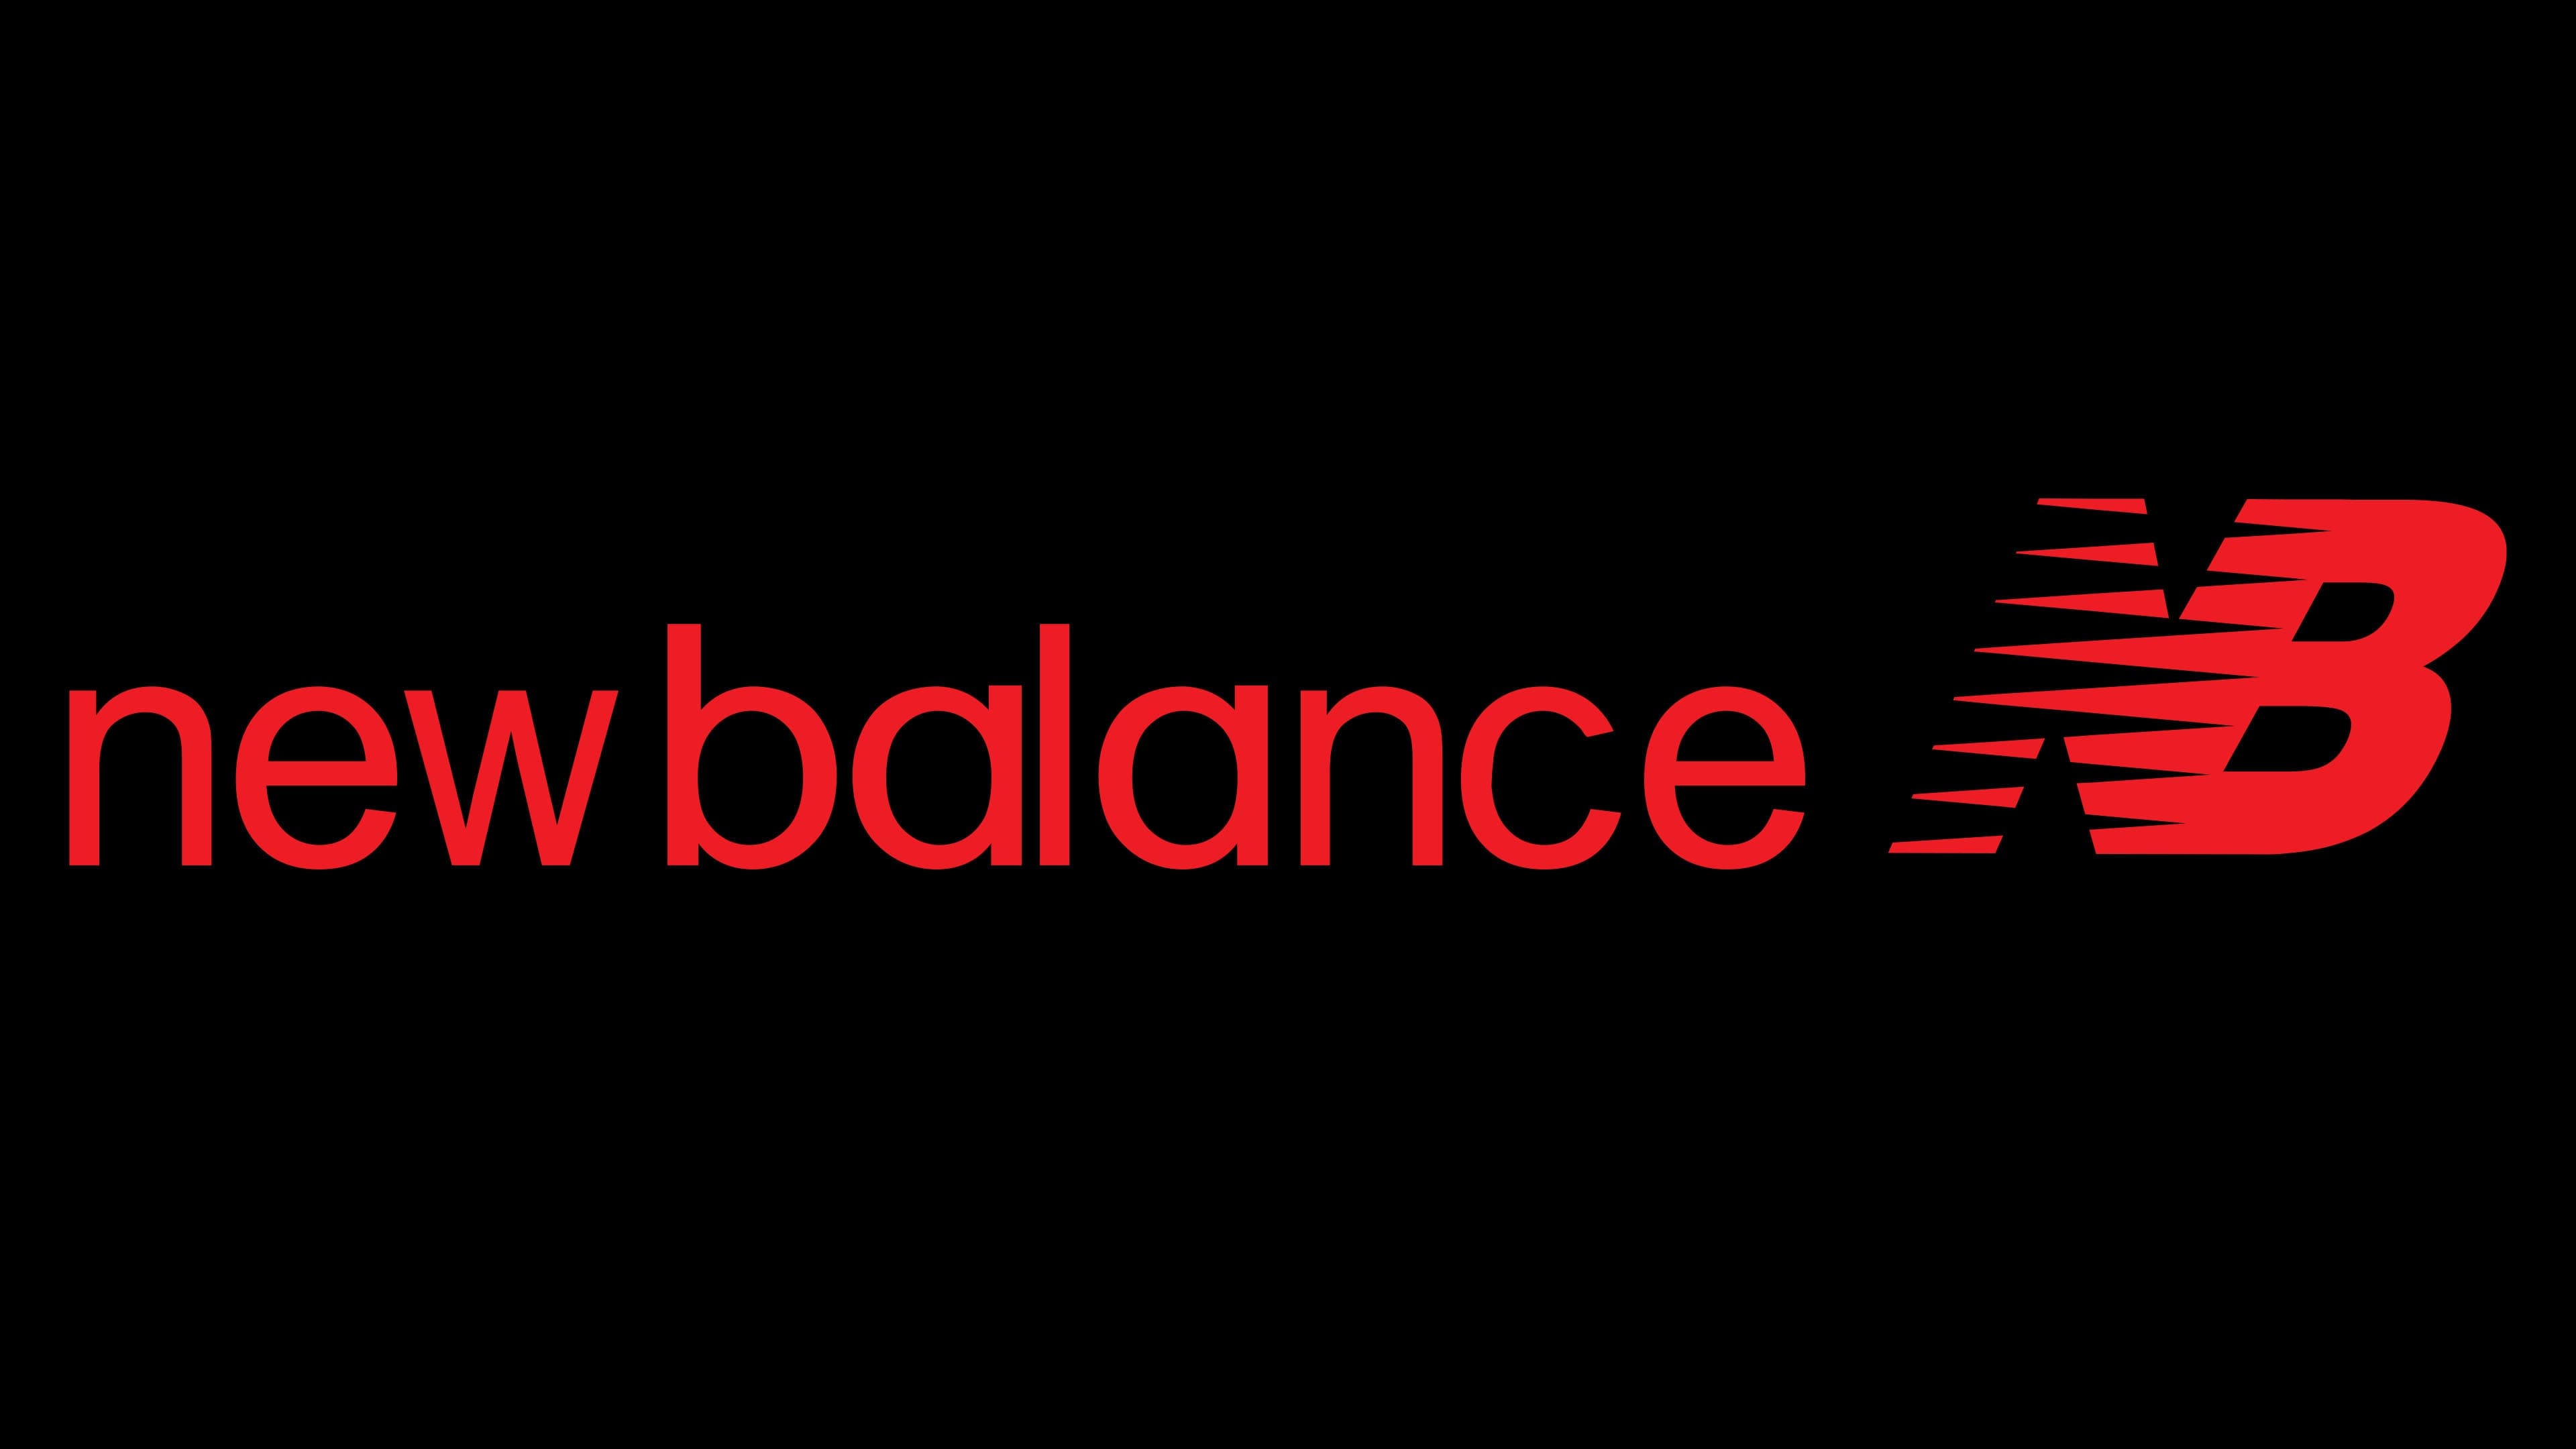 new balance n logo